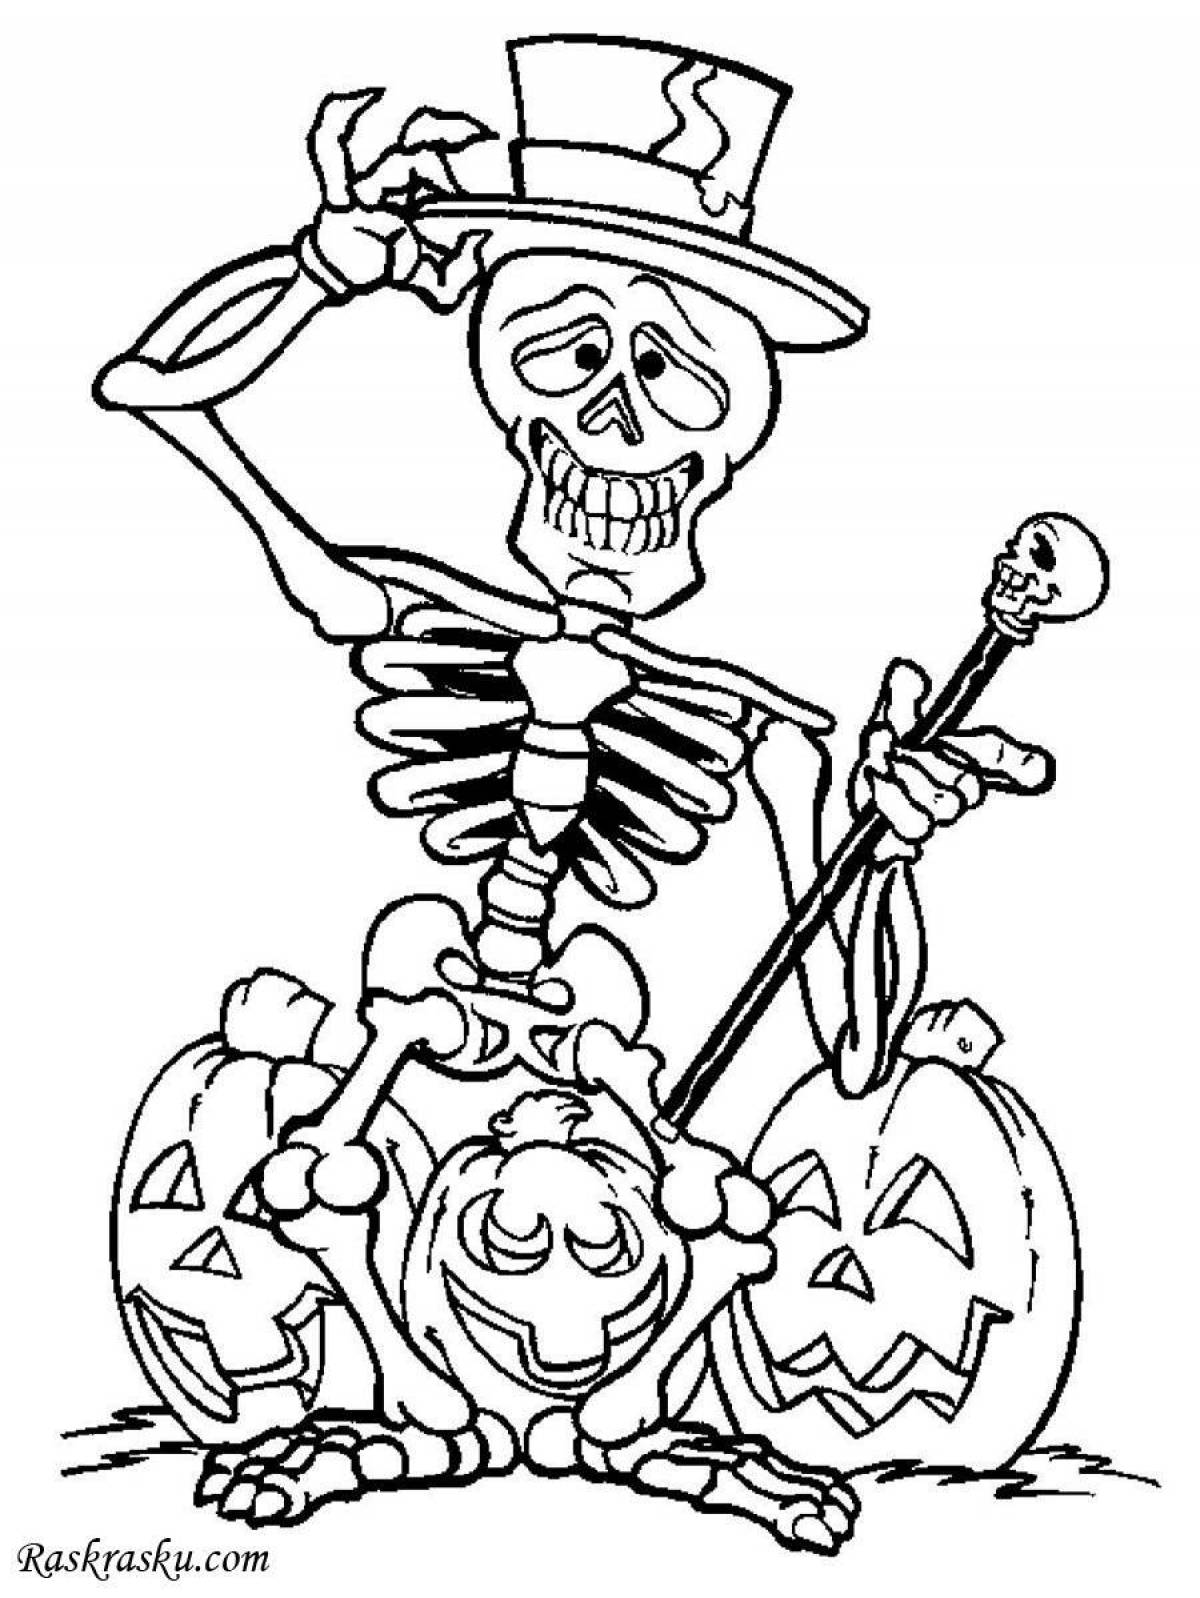 Grinning skeleton coloring page